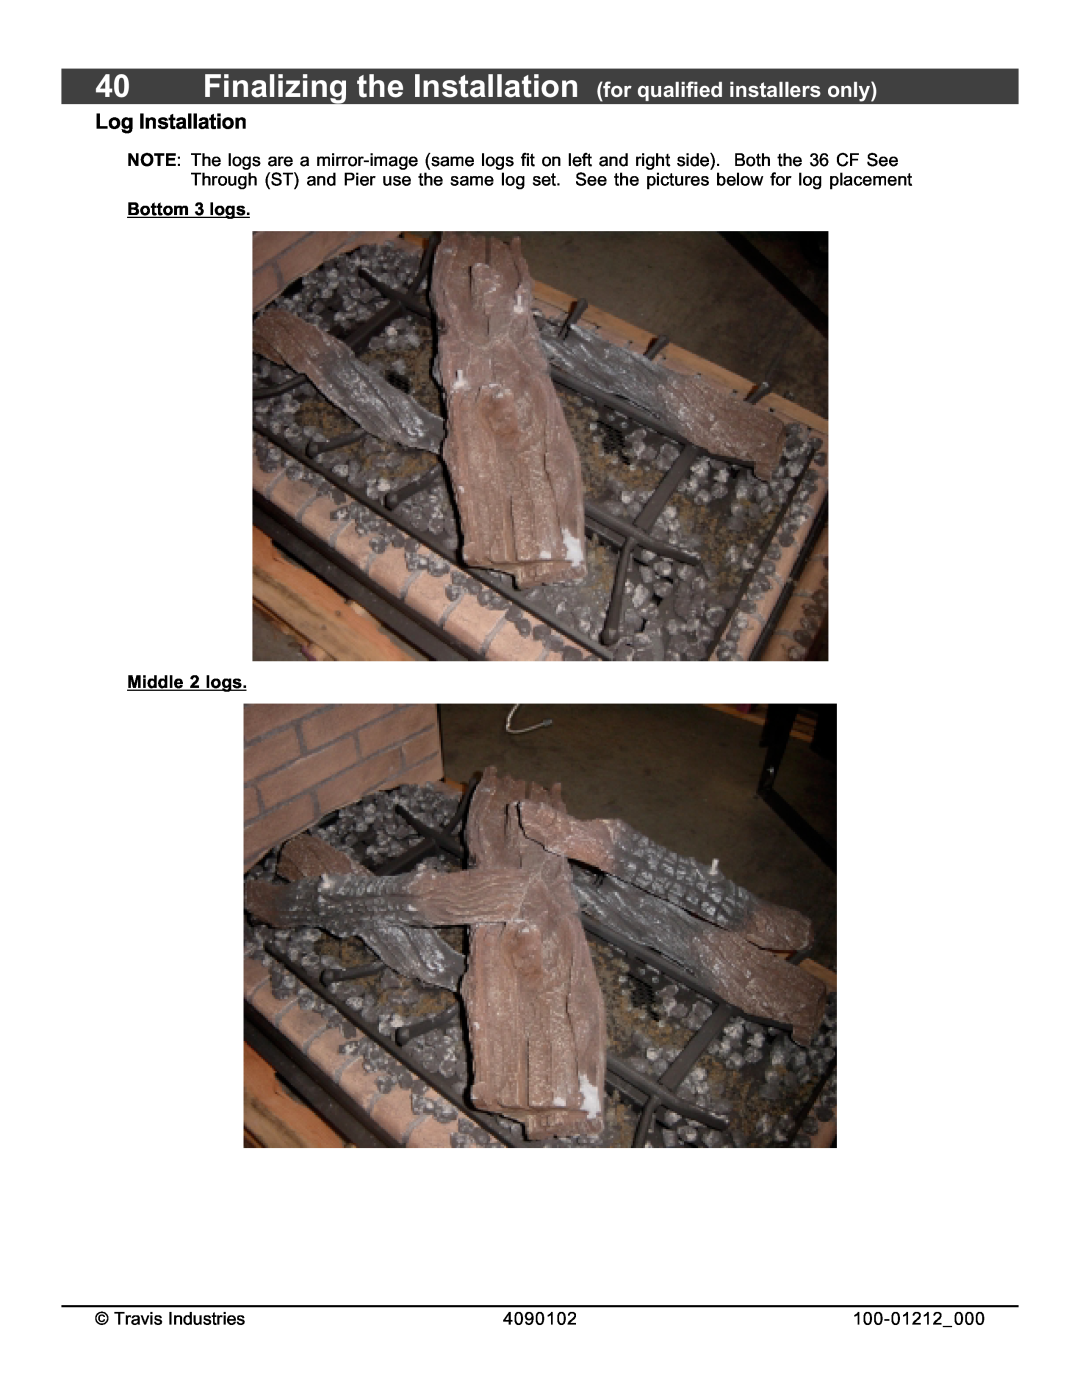 FireplaceXtrordinair 36CF installation manual Log Installation, Bottom 3 logs Middle 2 logs 